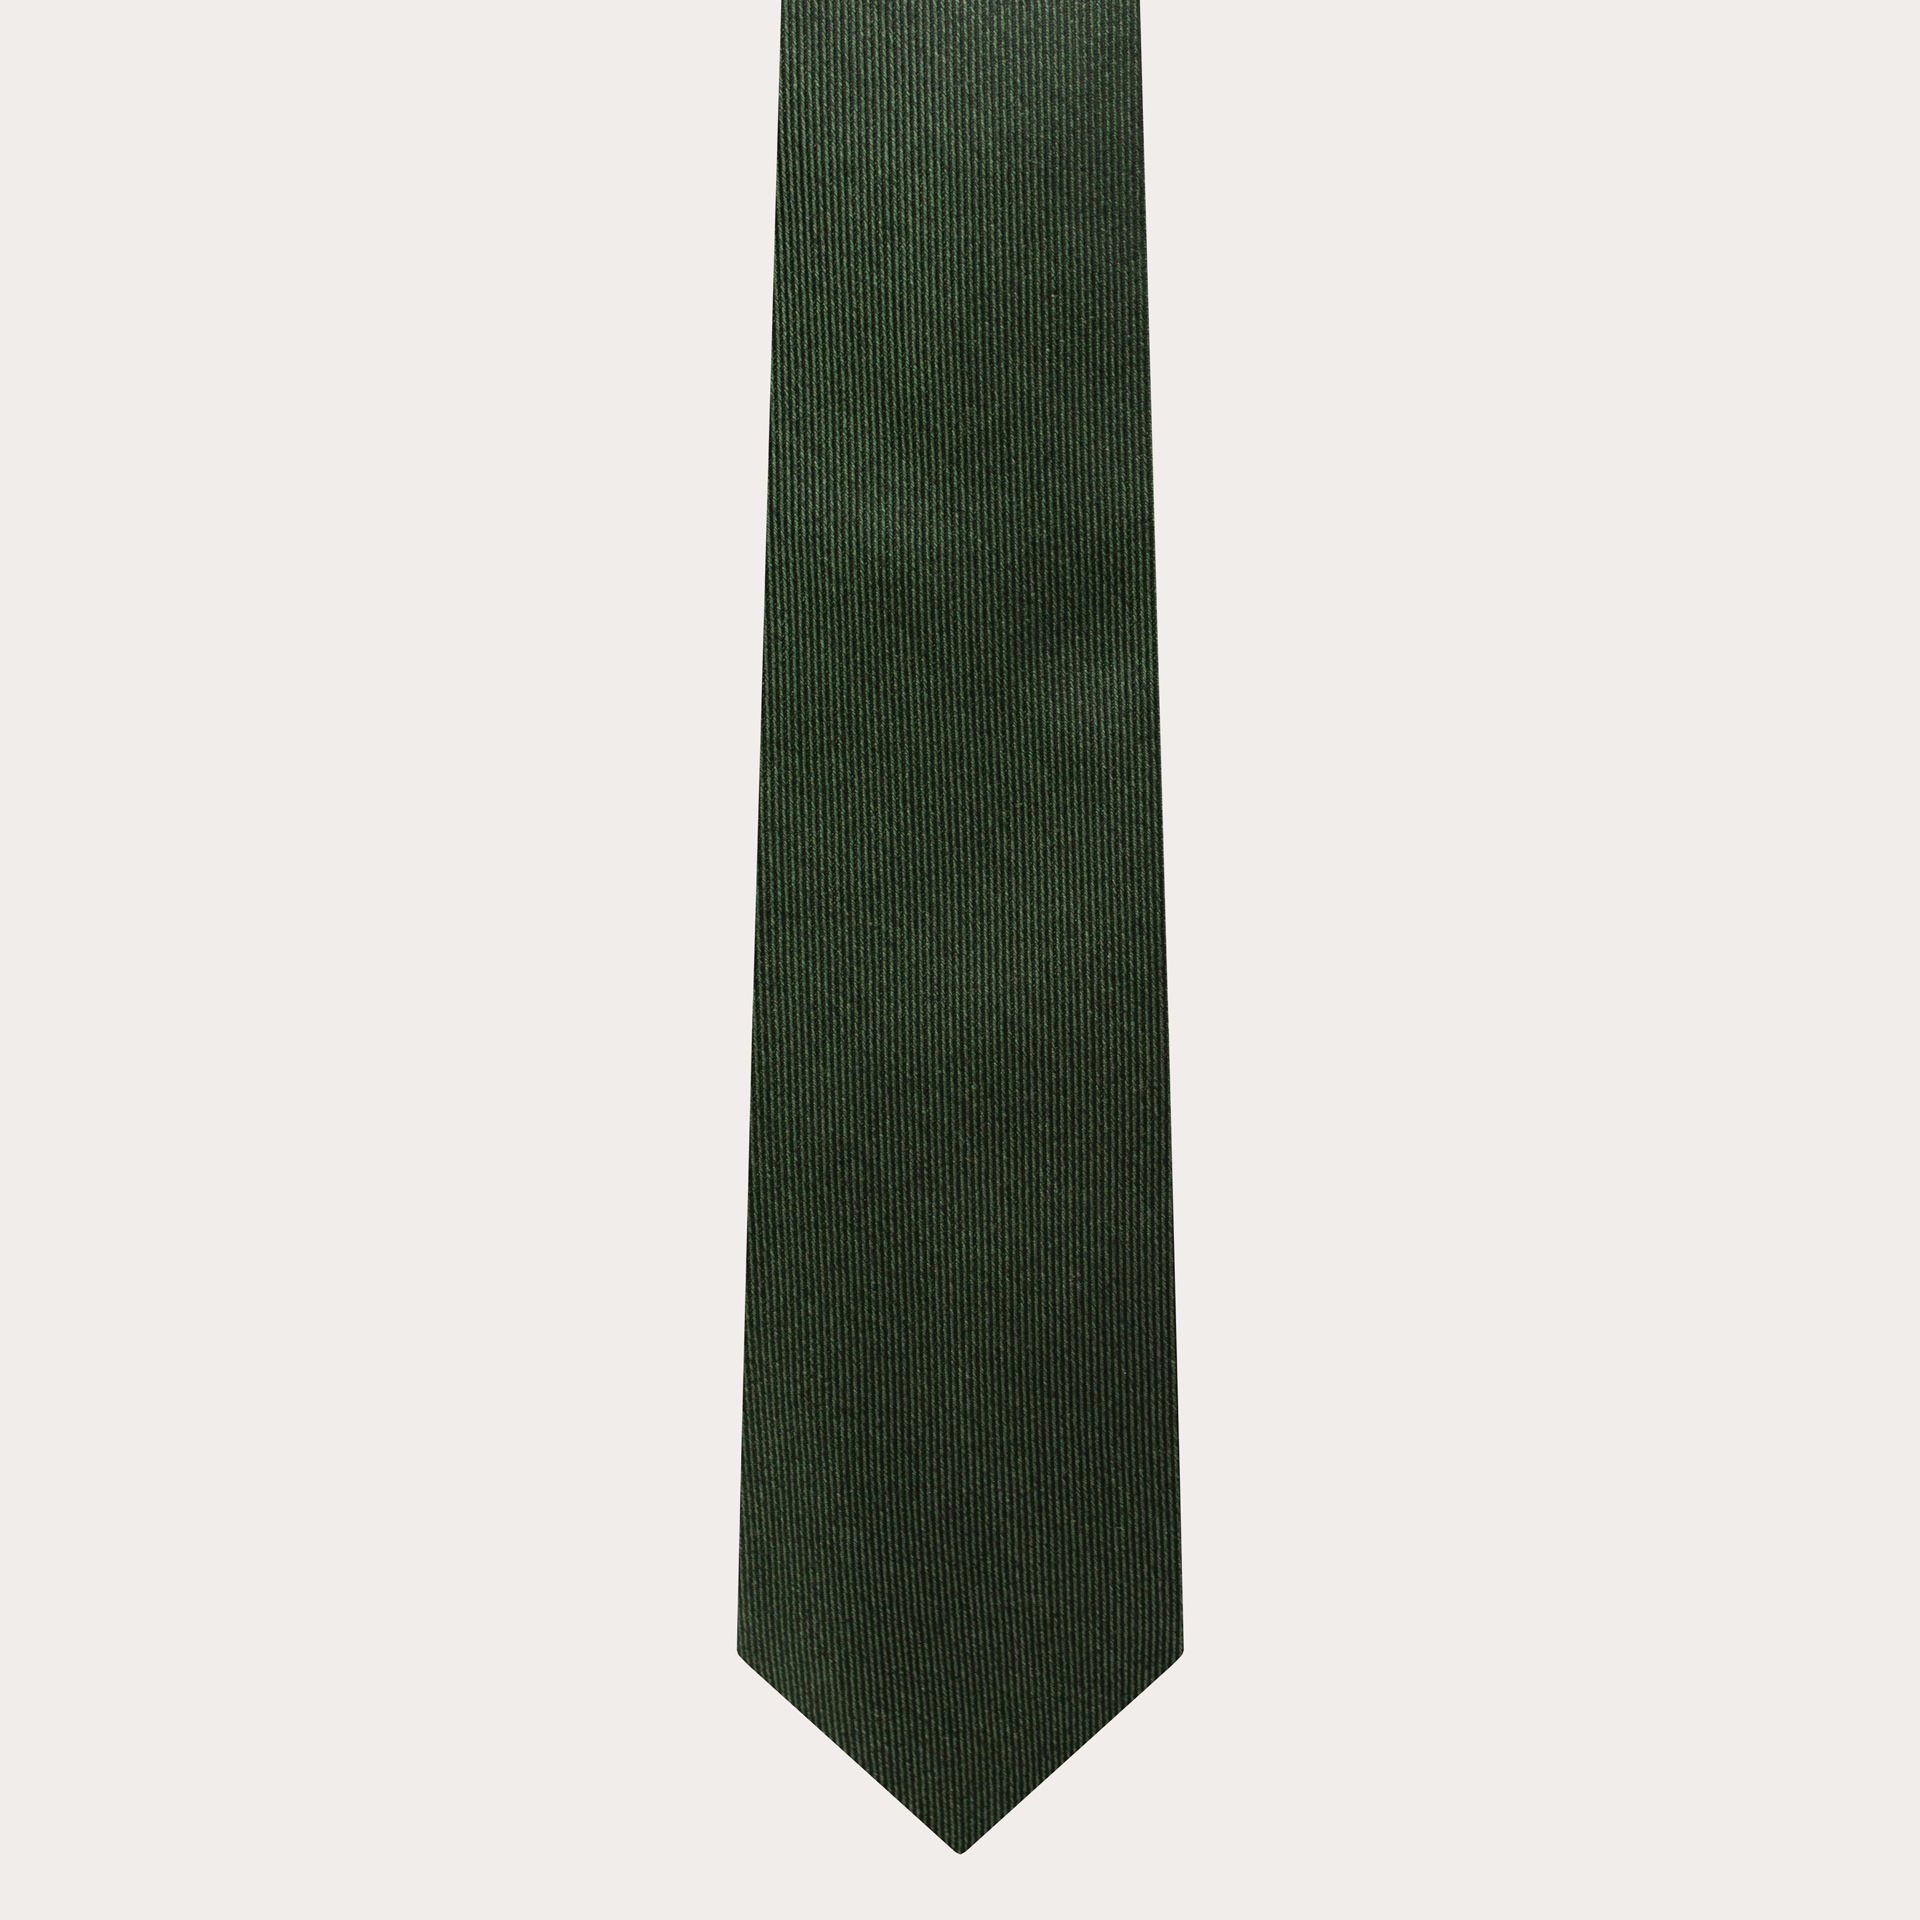 Corbata elegante de seda verde bosque